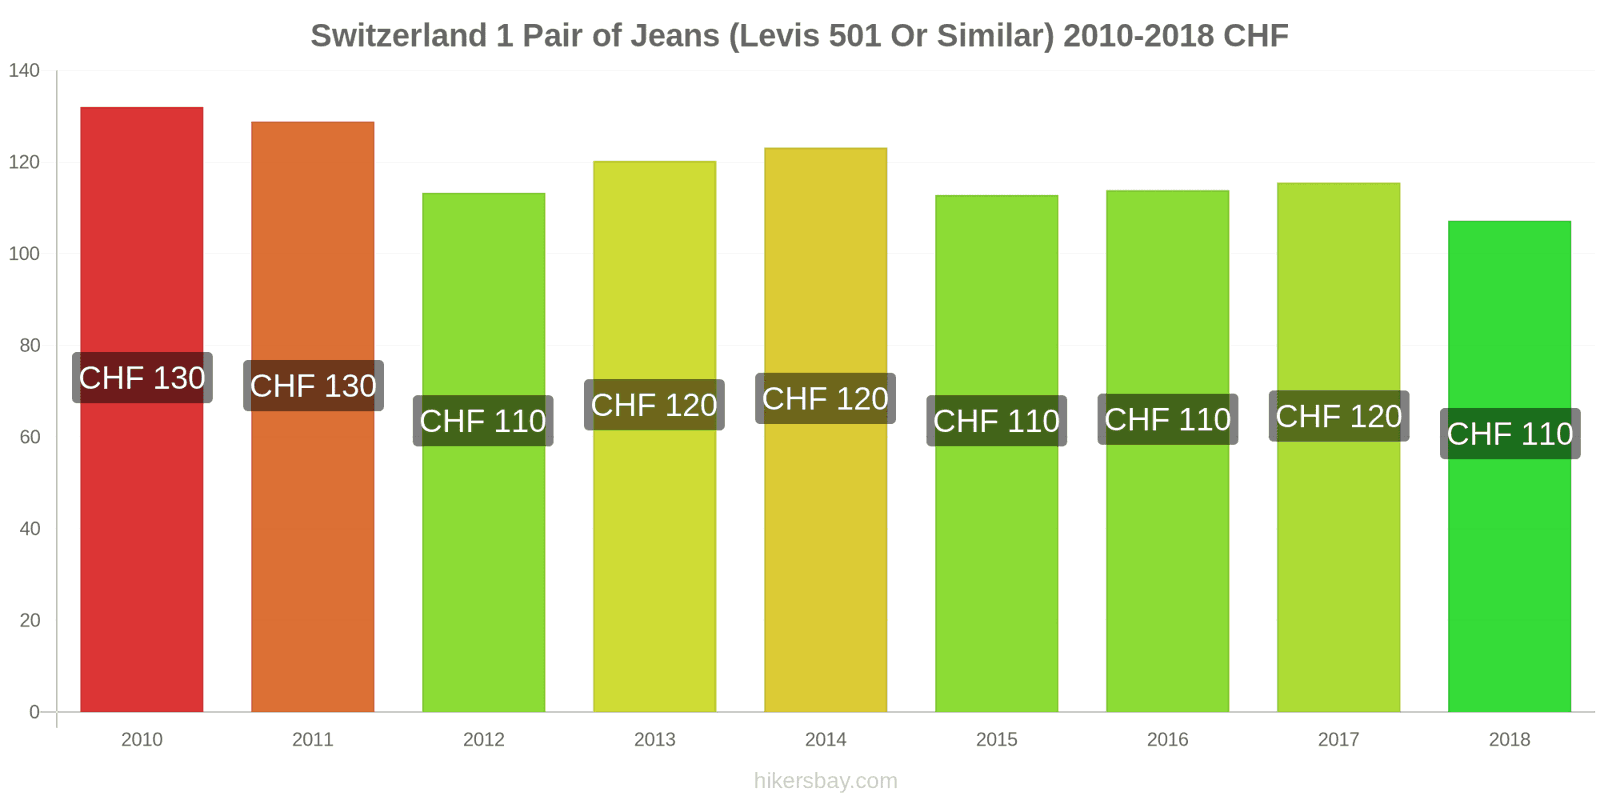 Switzerland price changes 1 pair of jeans (Levis 501 or similar) hikersbay.com